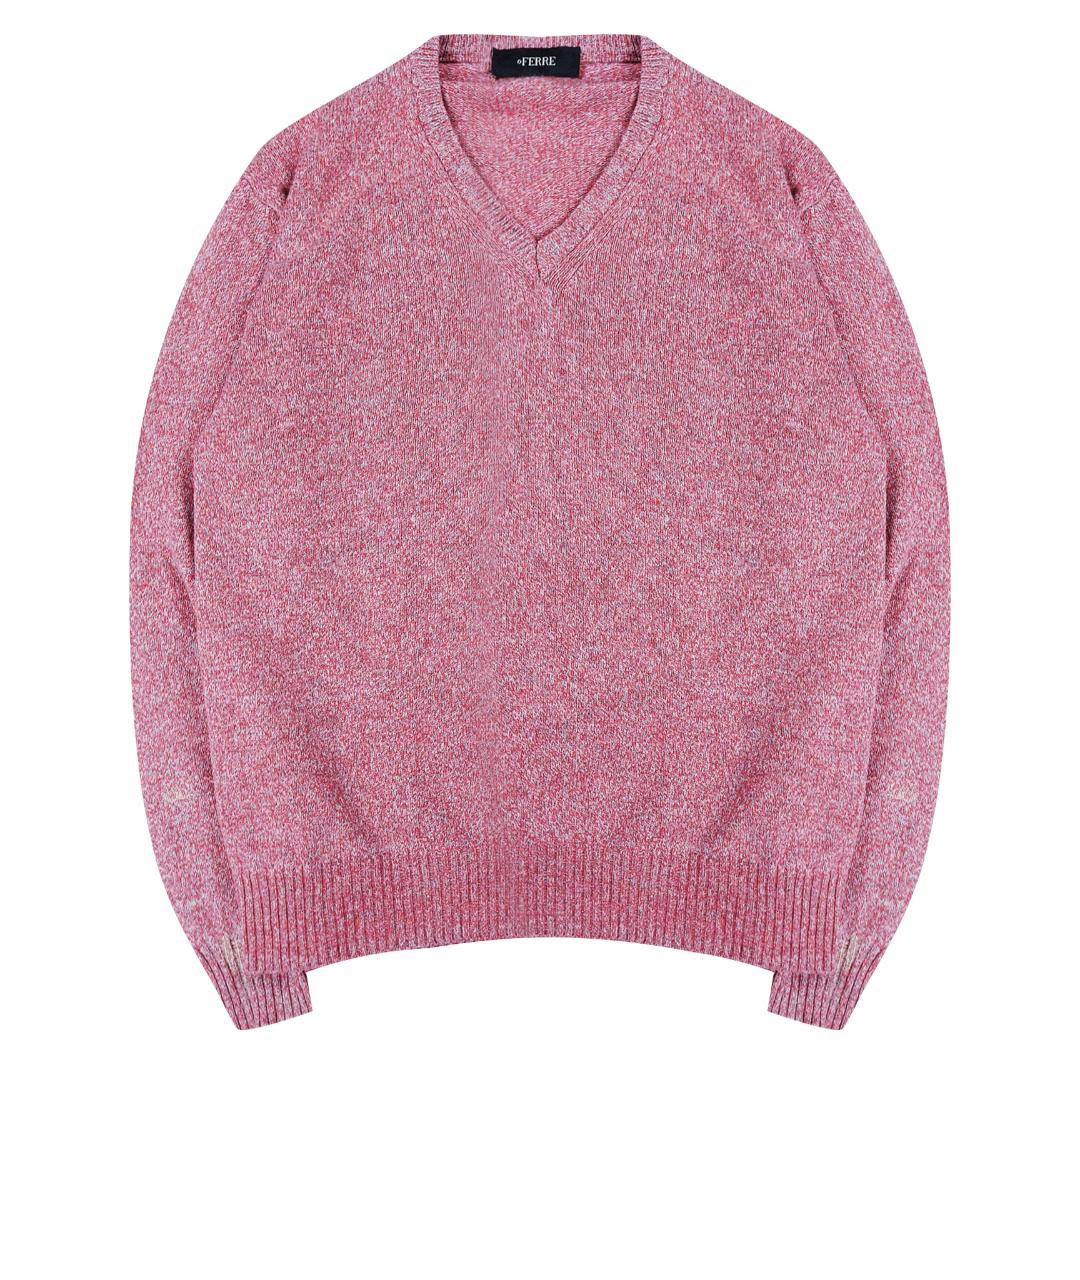 GIANFRANCO FERRE VINTAGE Розовый шерстяной джемпер / свитер, фото 1